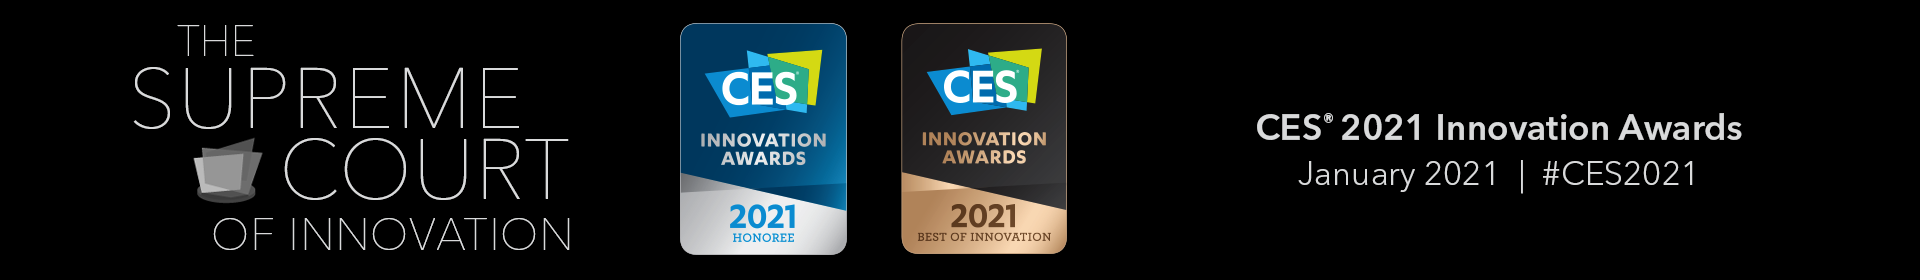 CES 2021 Innovation Awards Event Banner